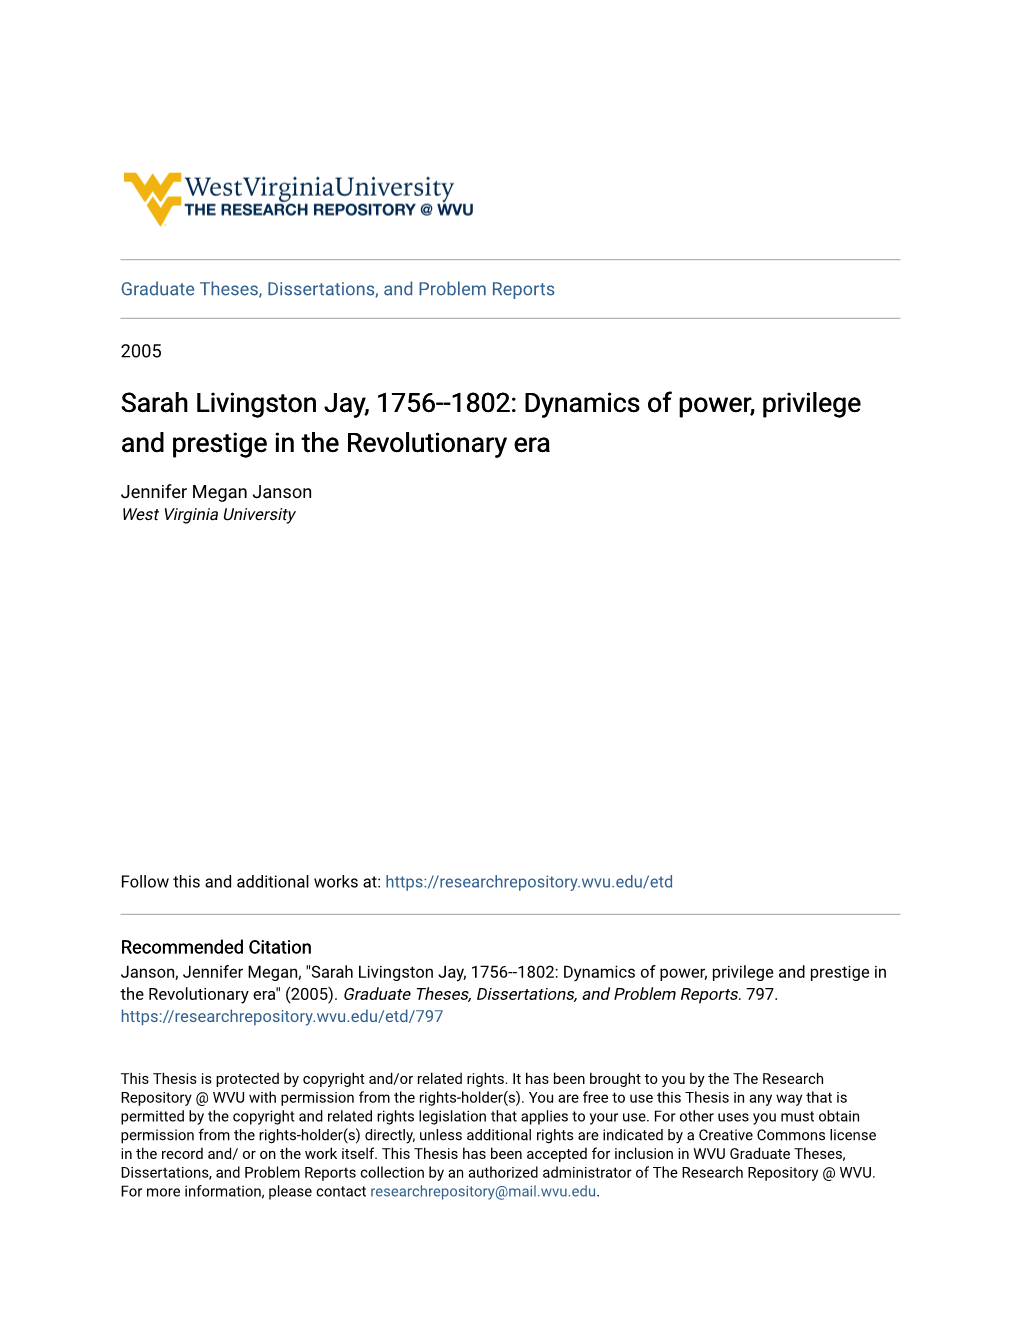 Sarah Livingston Jay, 1756--1802: Dynamics of Power, Privilege and Prestige in the Revolutionary Era